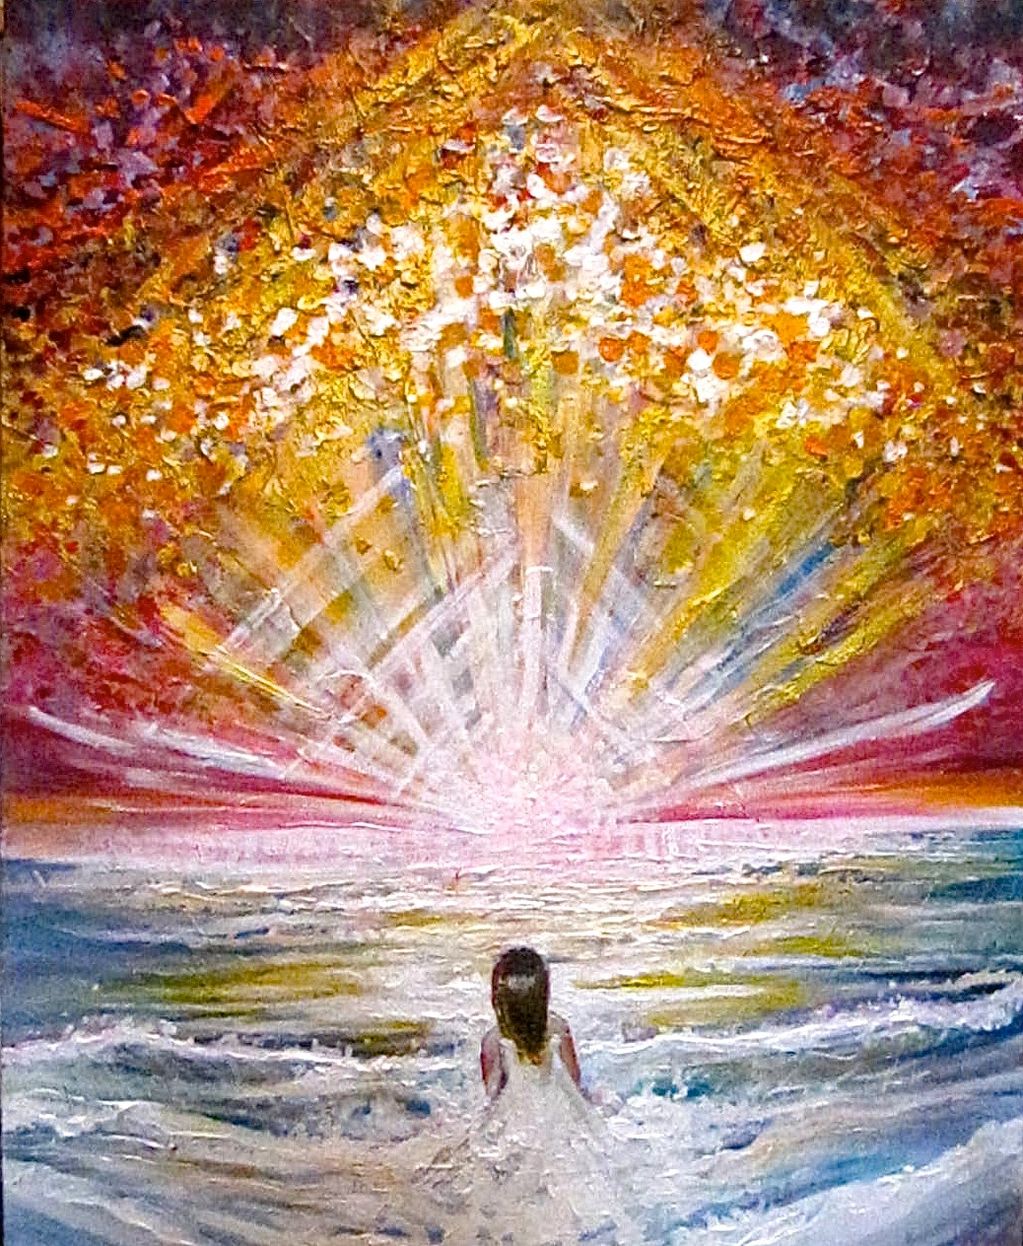 woman in water ocean surf looking at sky yellow glow stars